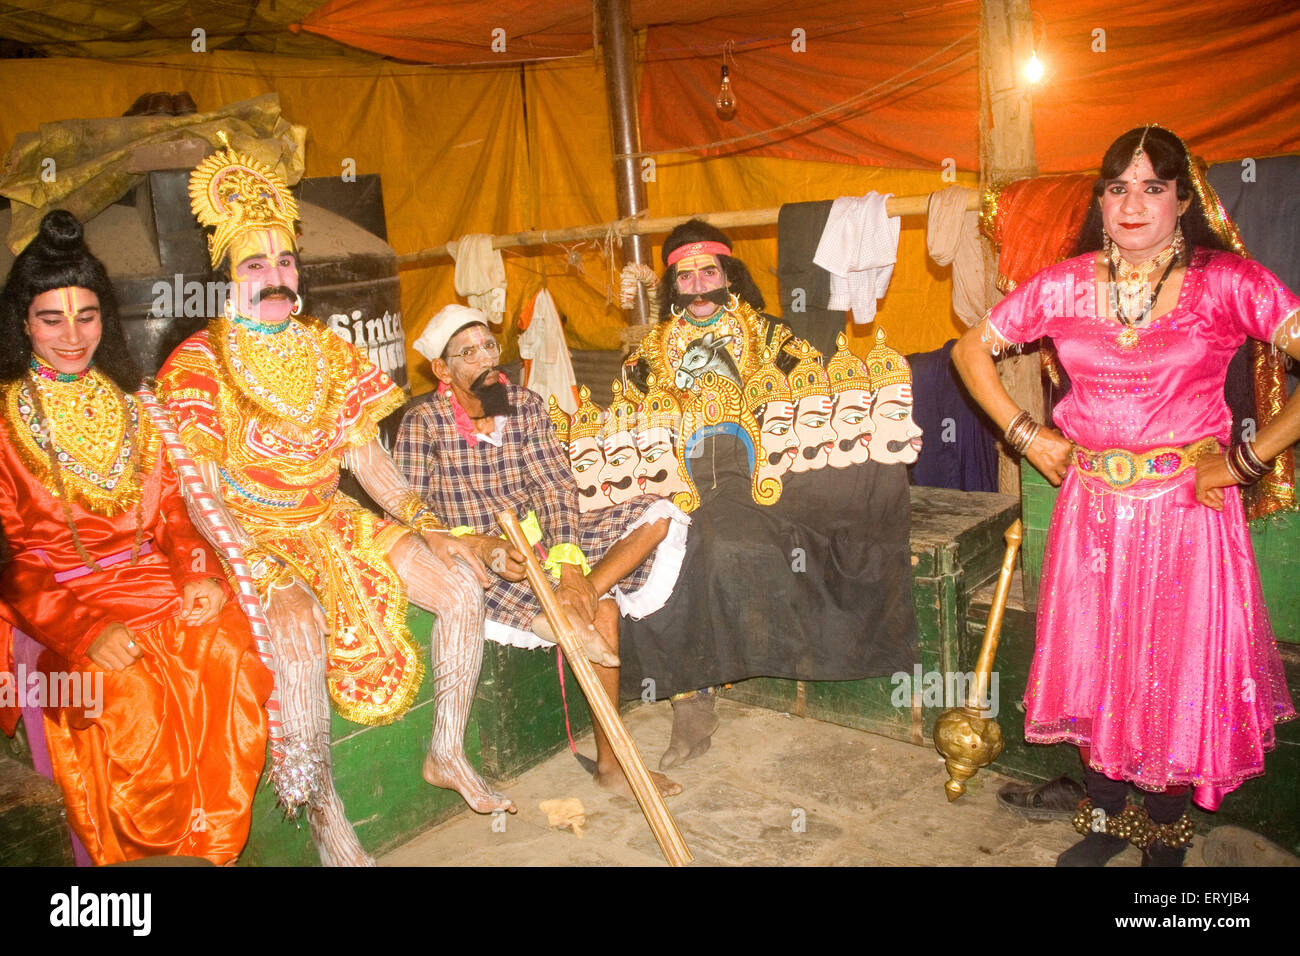 Artista nel carattere di ravan ; ram ; joker e ballerini maschio back stage in ramlila ; India n. MR Foto Stock